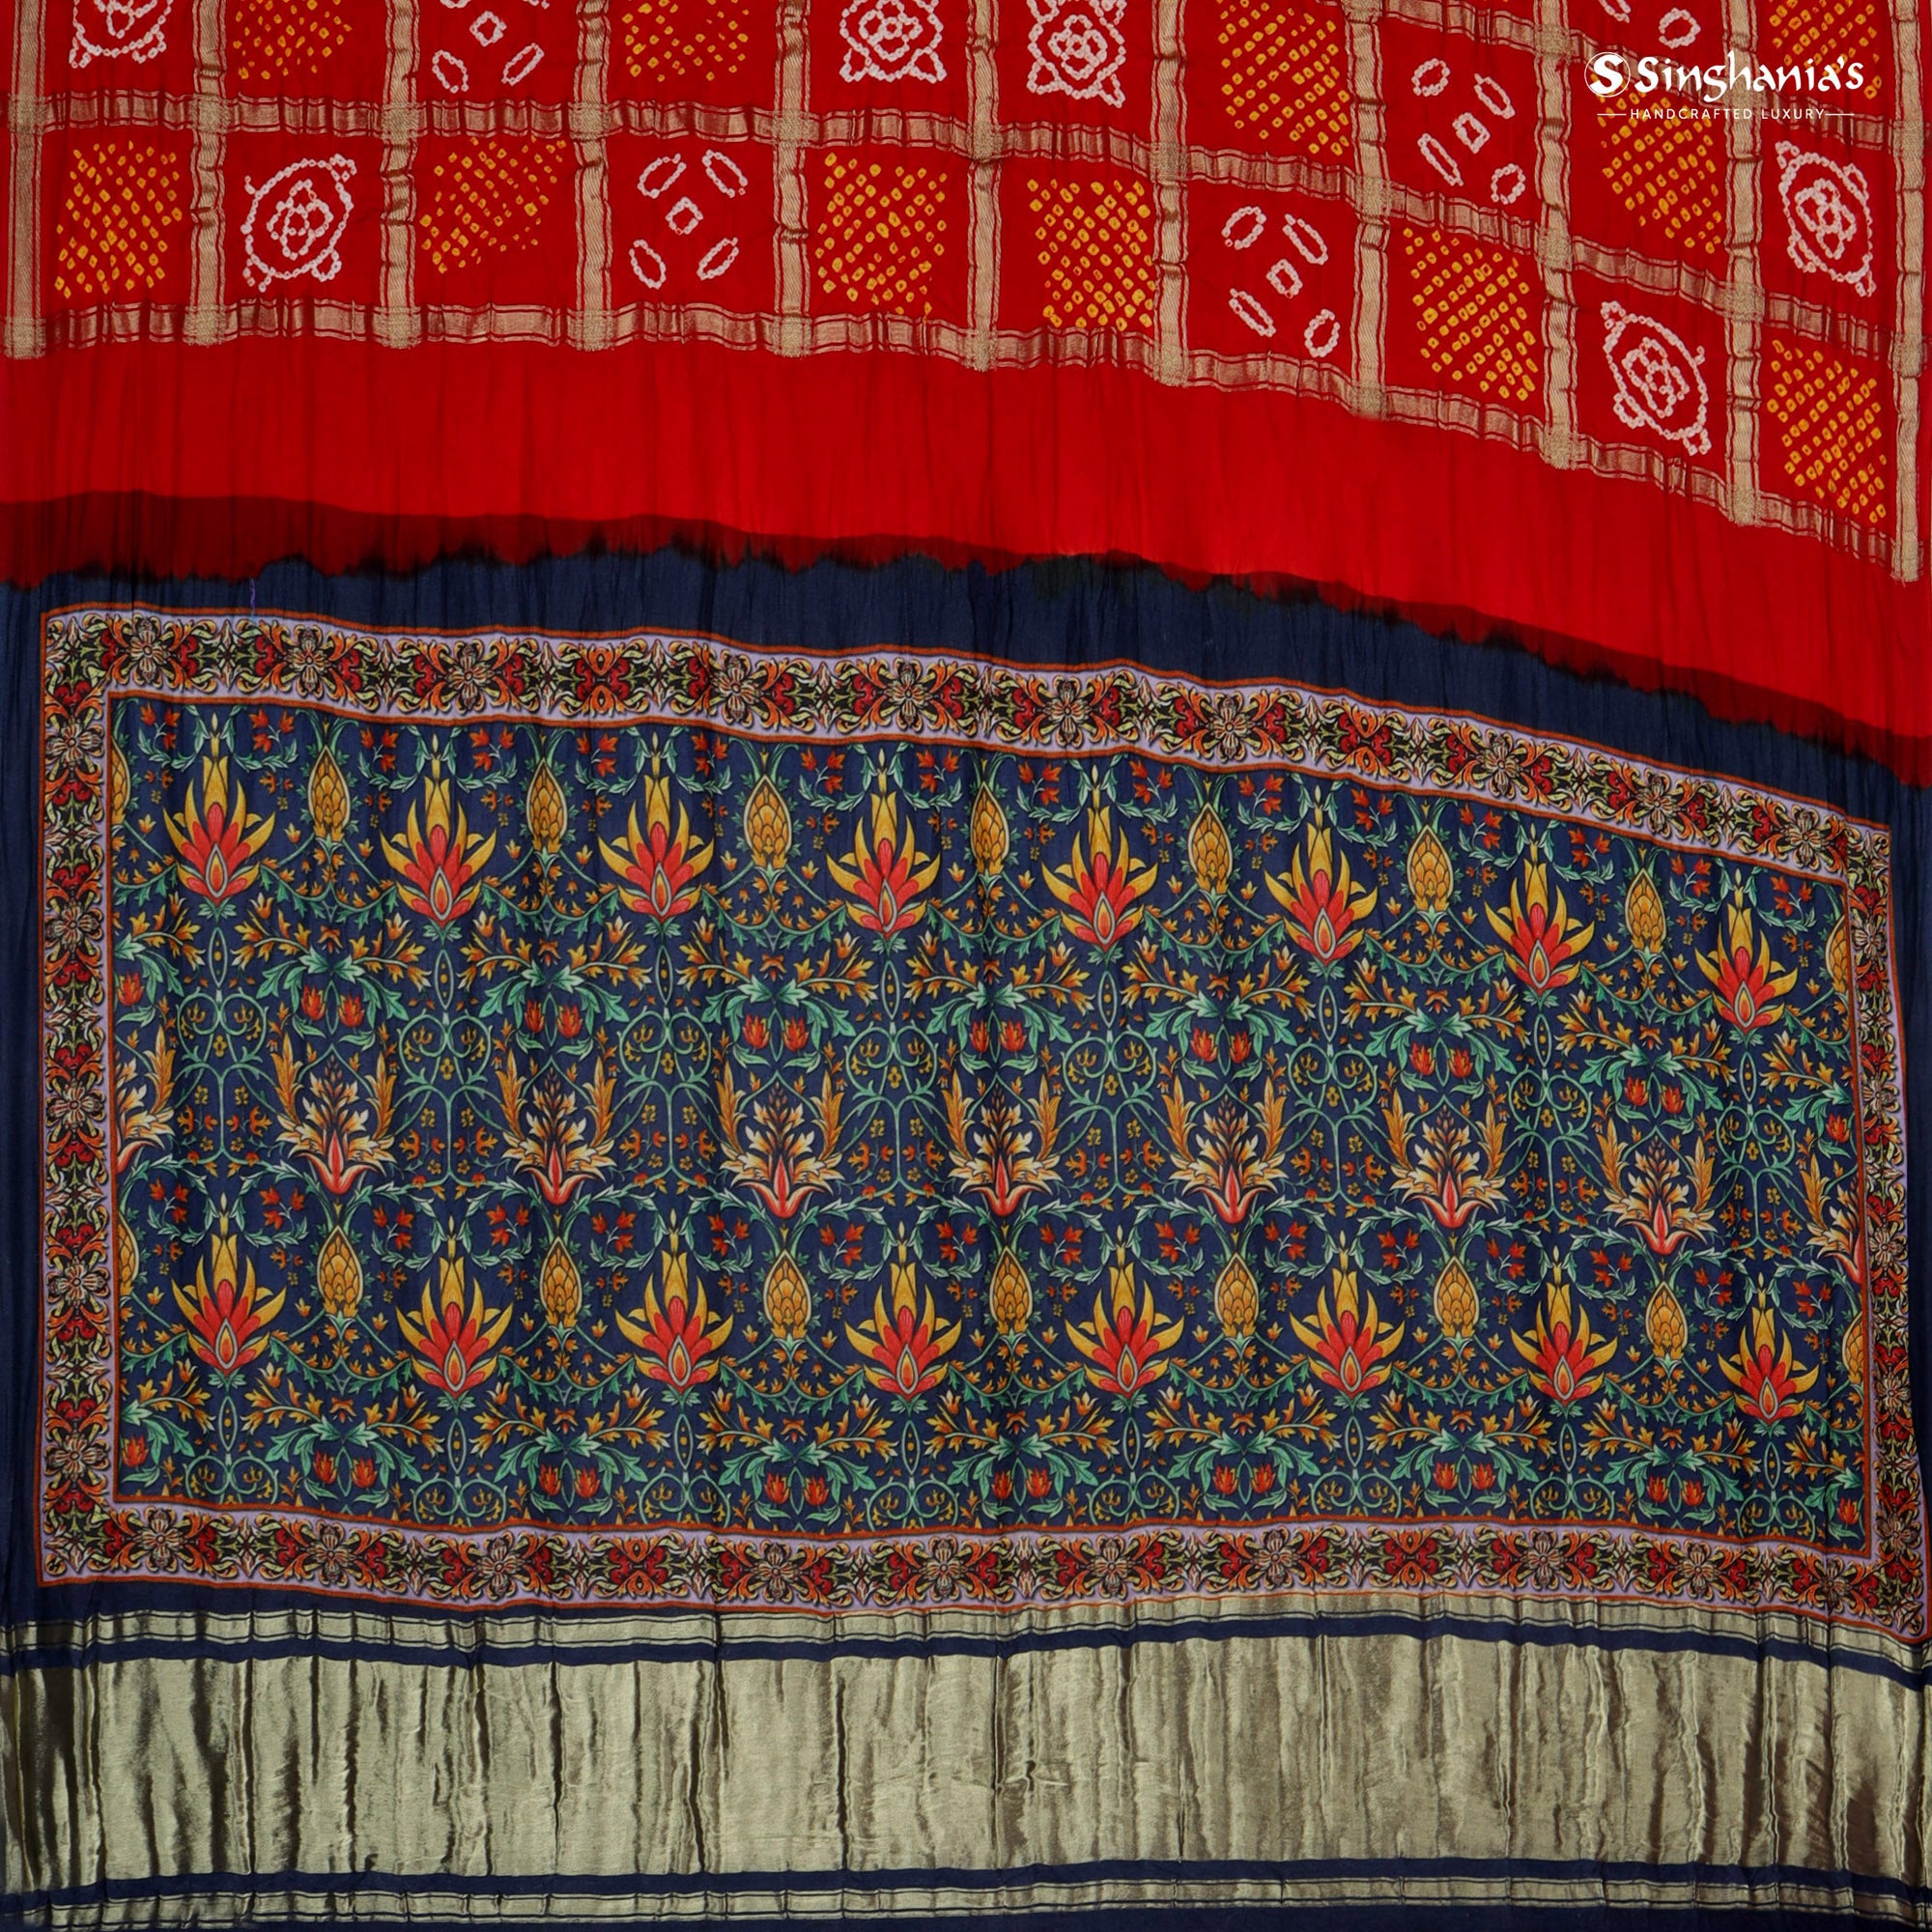 Vibrant Red Bandhani Silk Saree